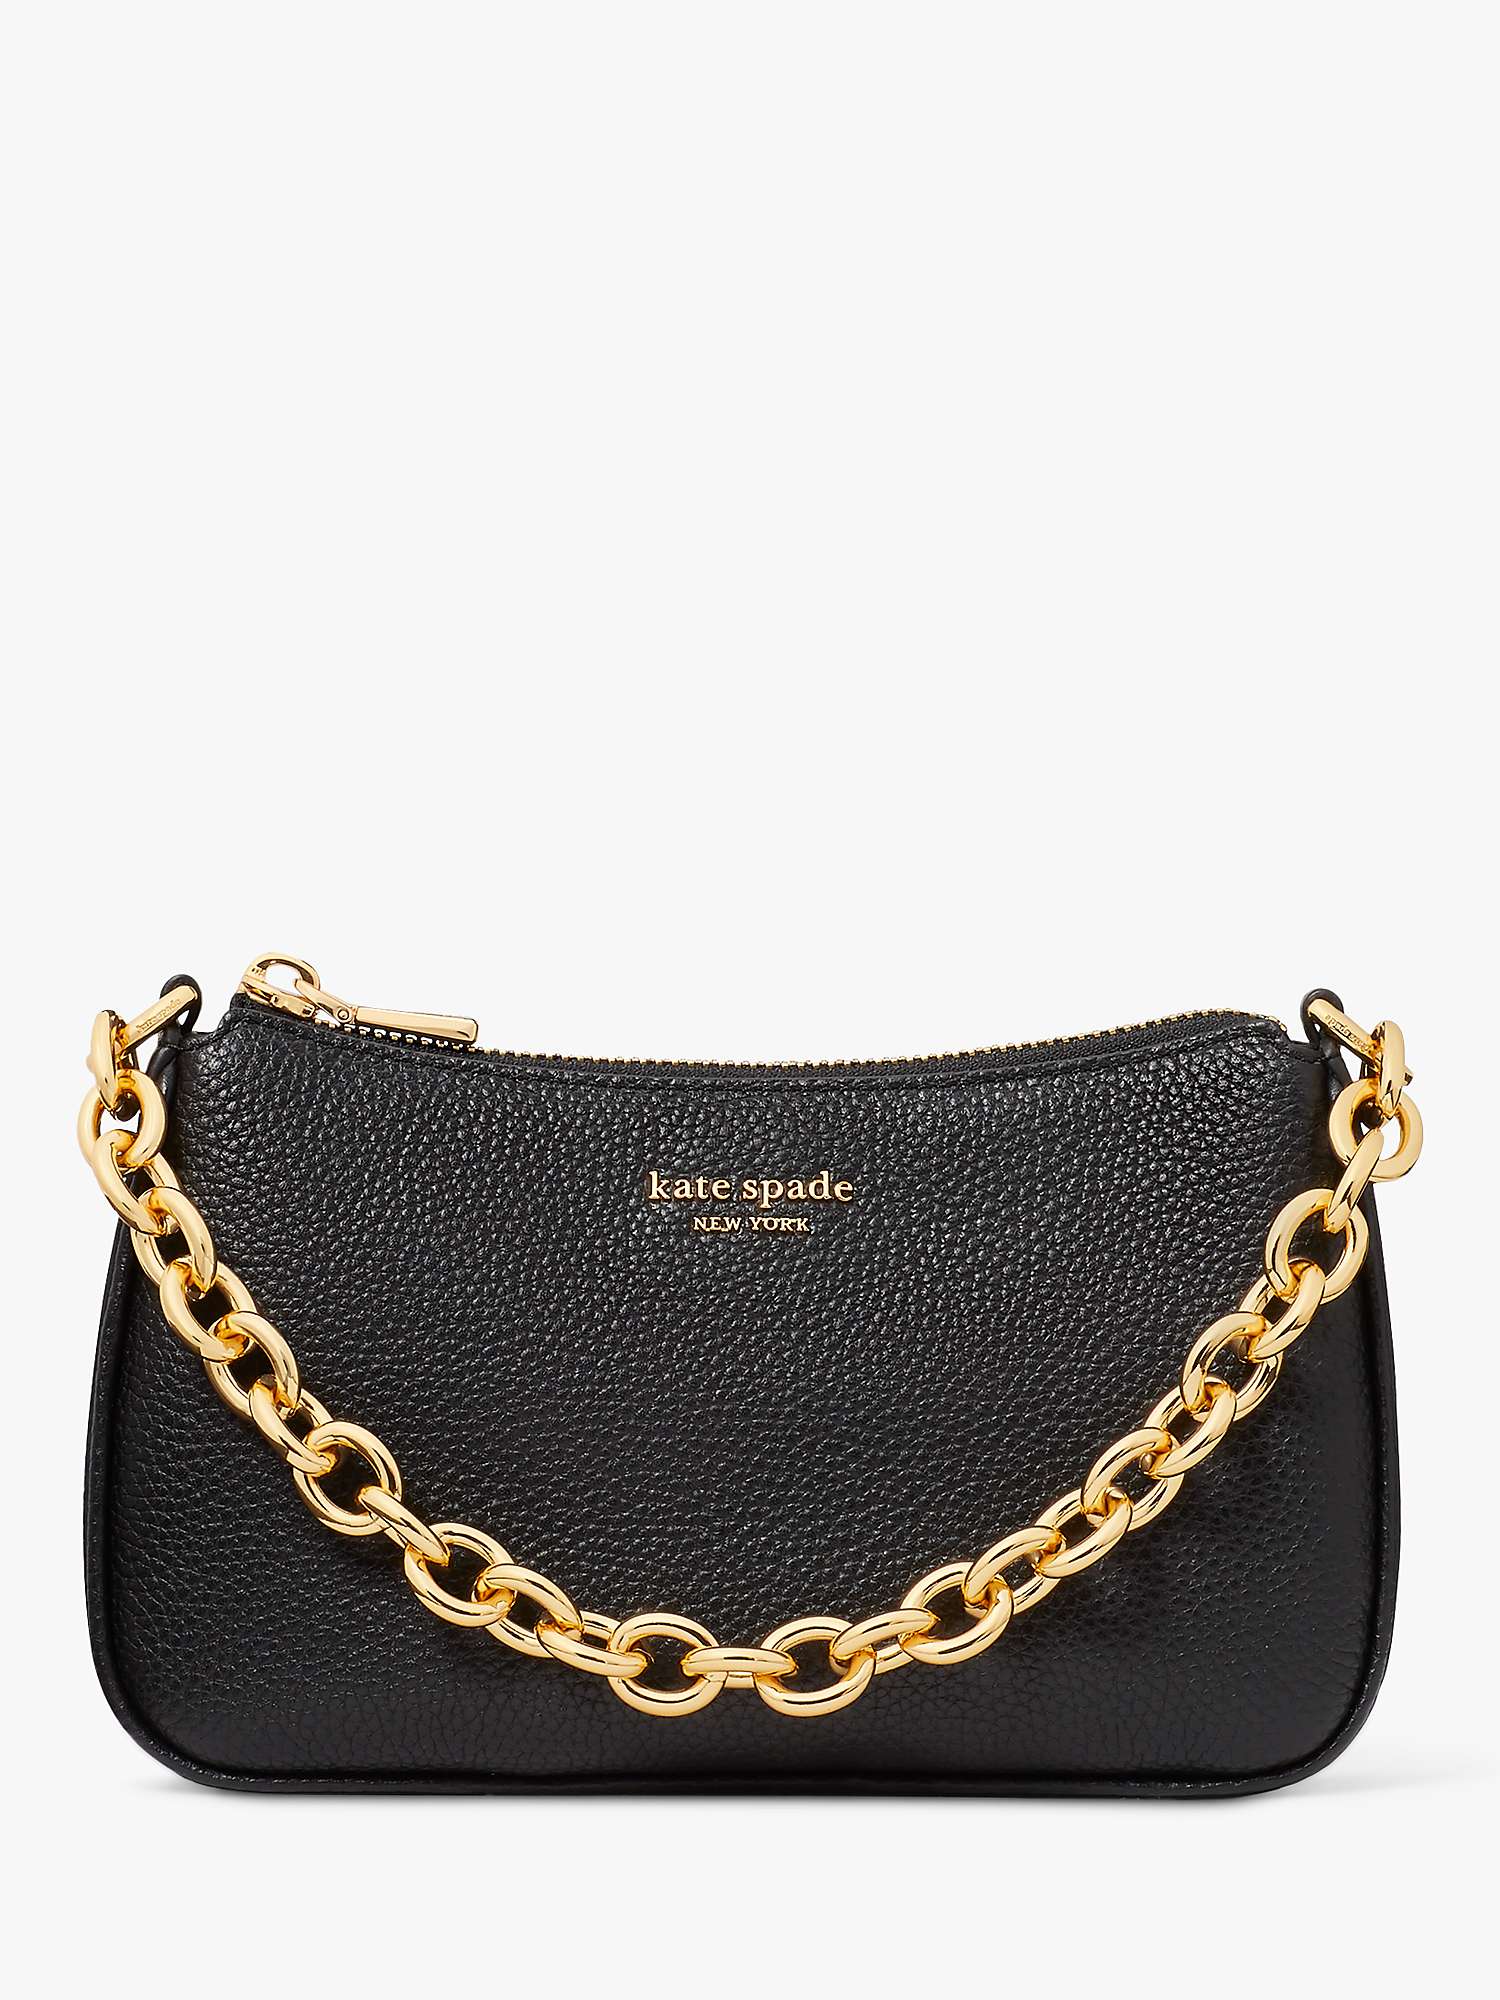 Buy kate spade new york Jolie Pebbled Leather Cross Body Bag Online at johnlewis.com